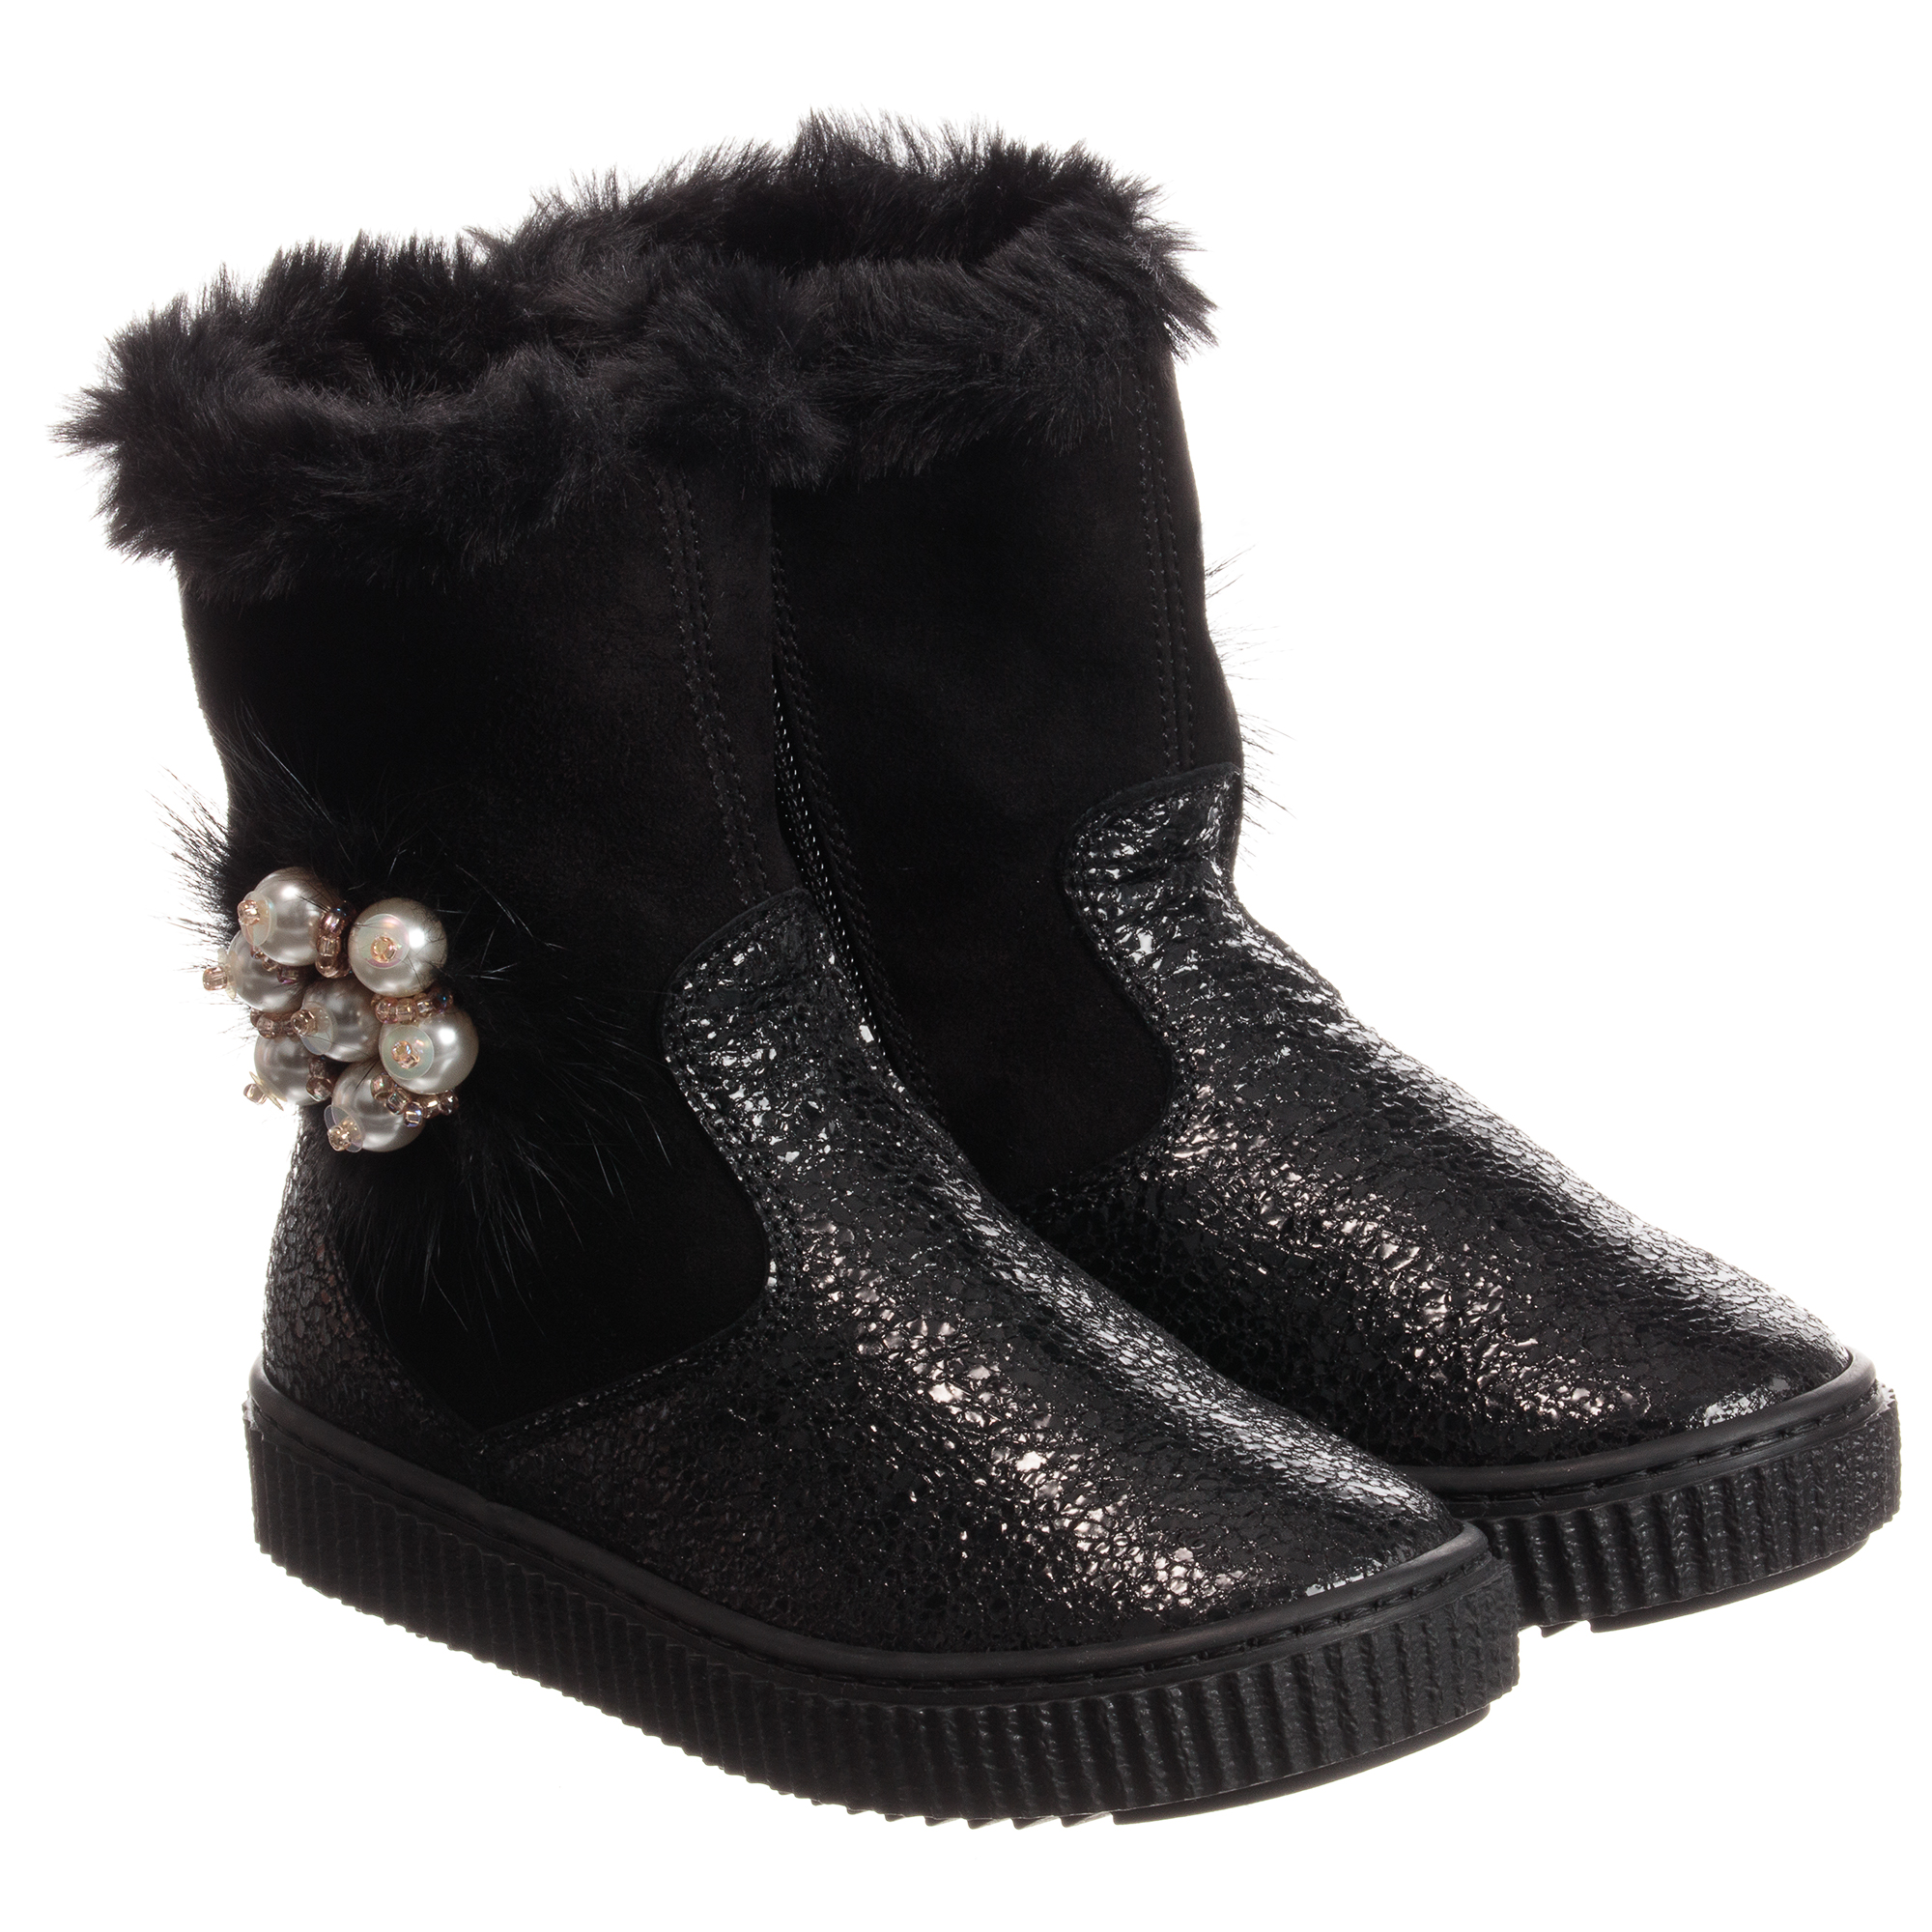 BOBBLEKIDS Little Girls Black Soft Leather Shoes Carla 3M 